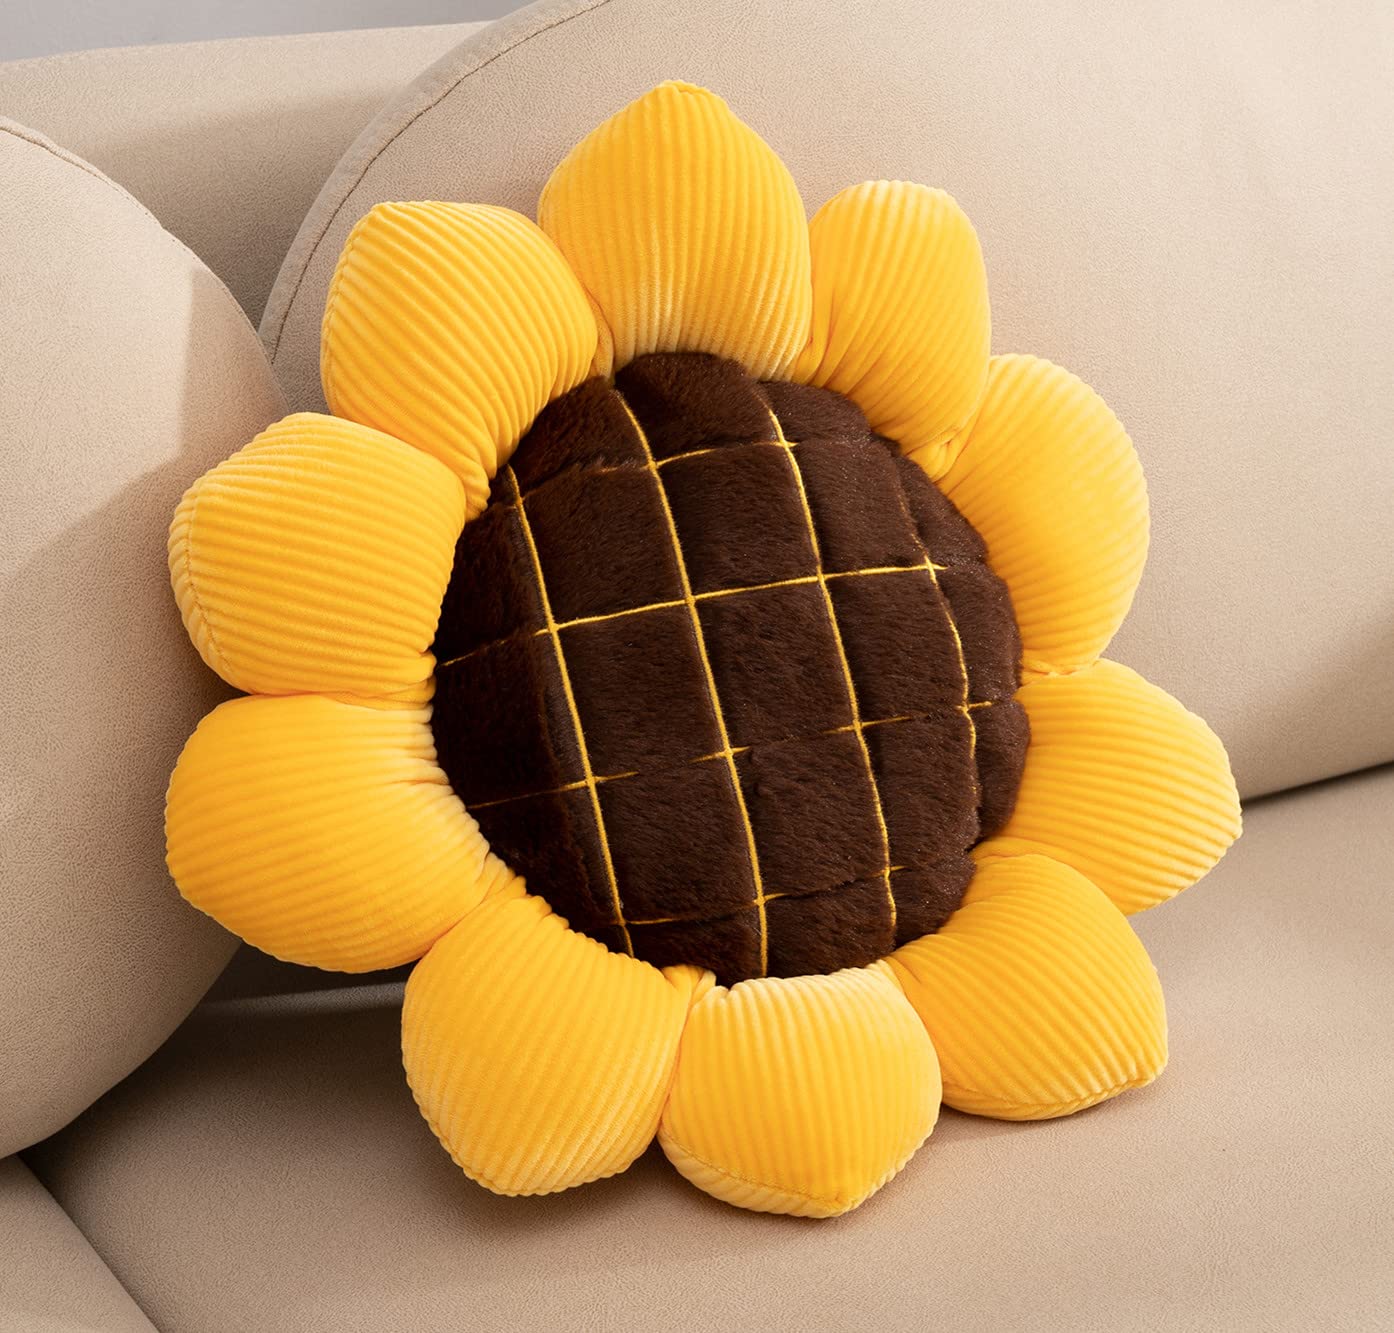 JBANG Flower Pillow Soft Sunflower Cushion Shaped Mat Throw Pillows Cushions for Home Room Decoration (15.35 Inch)